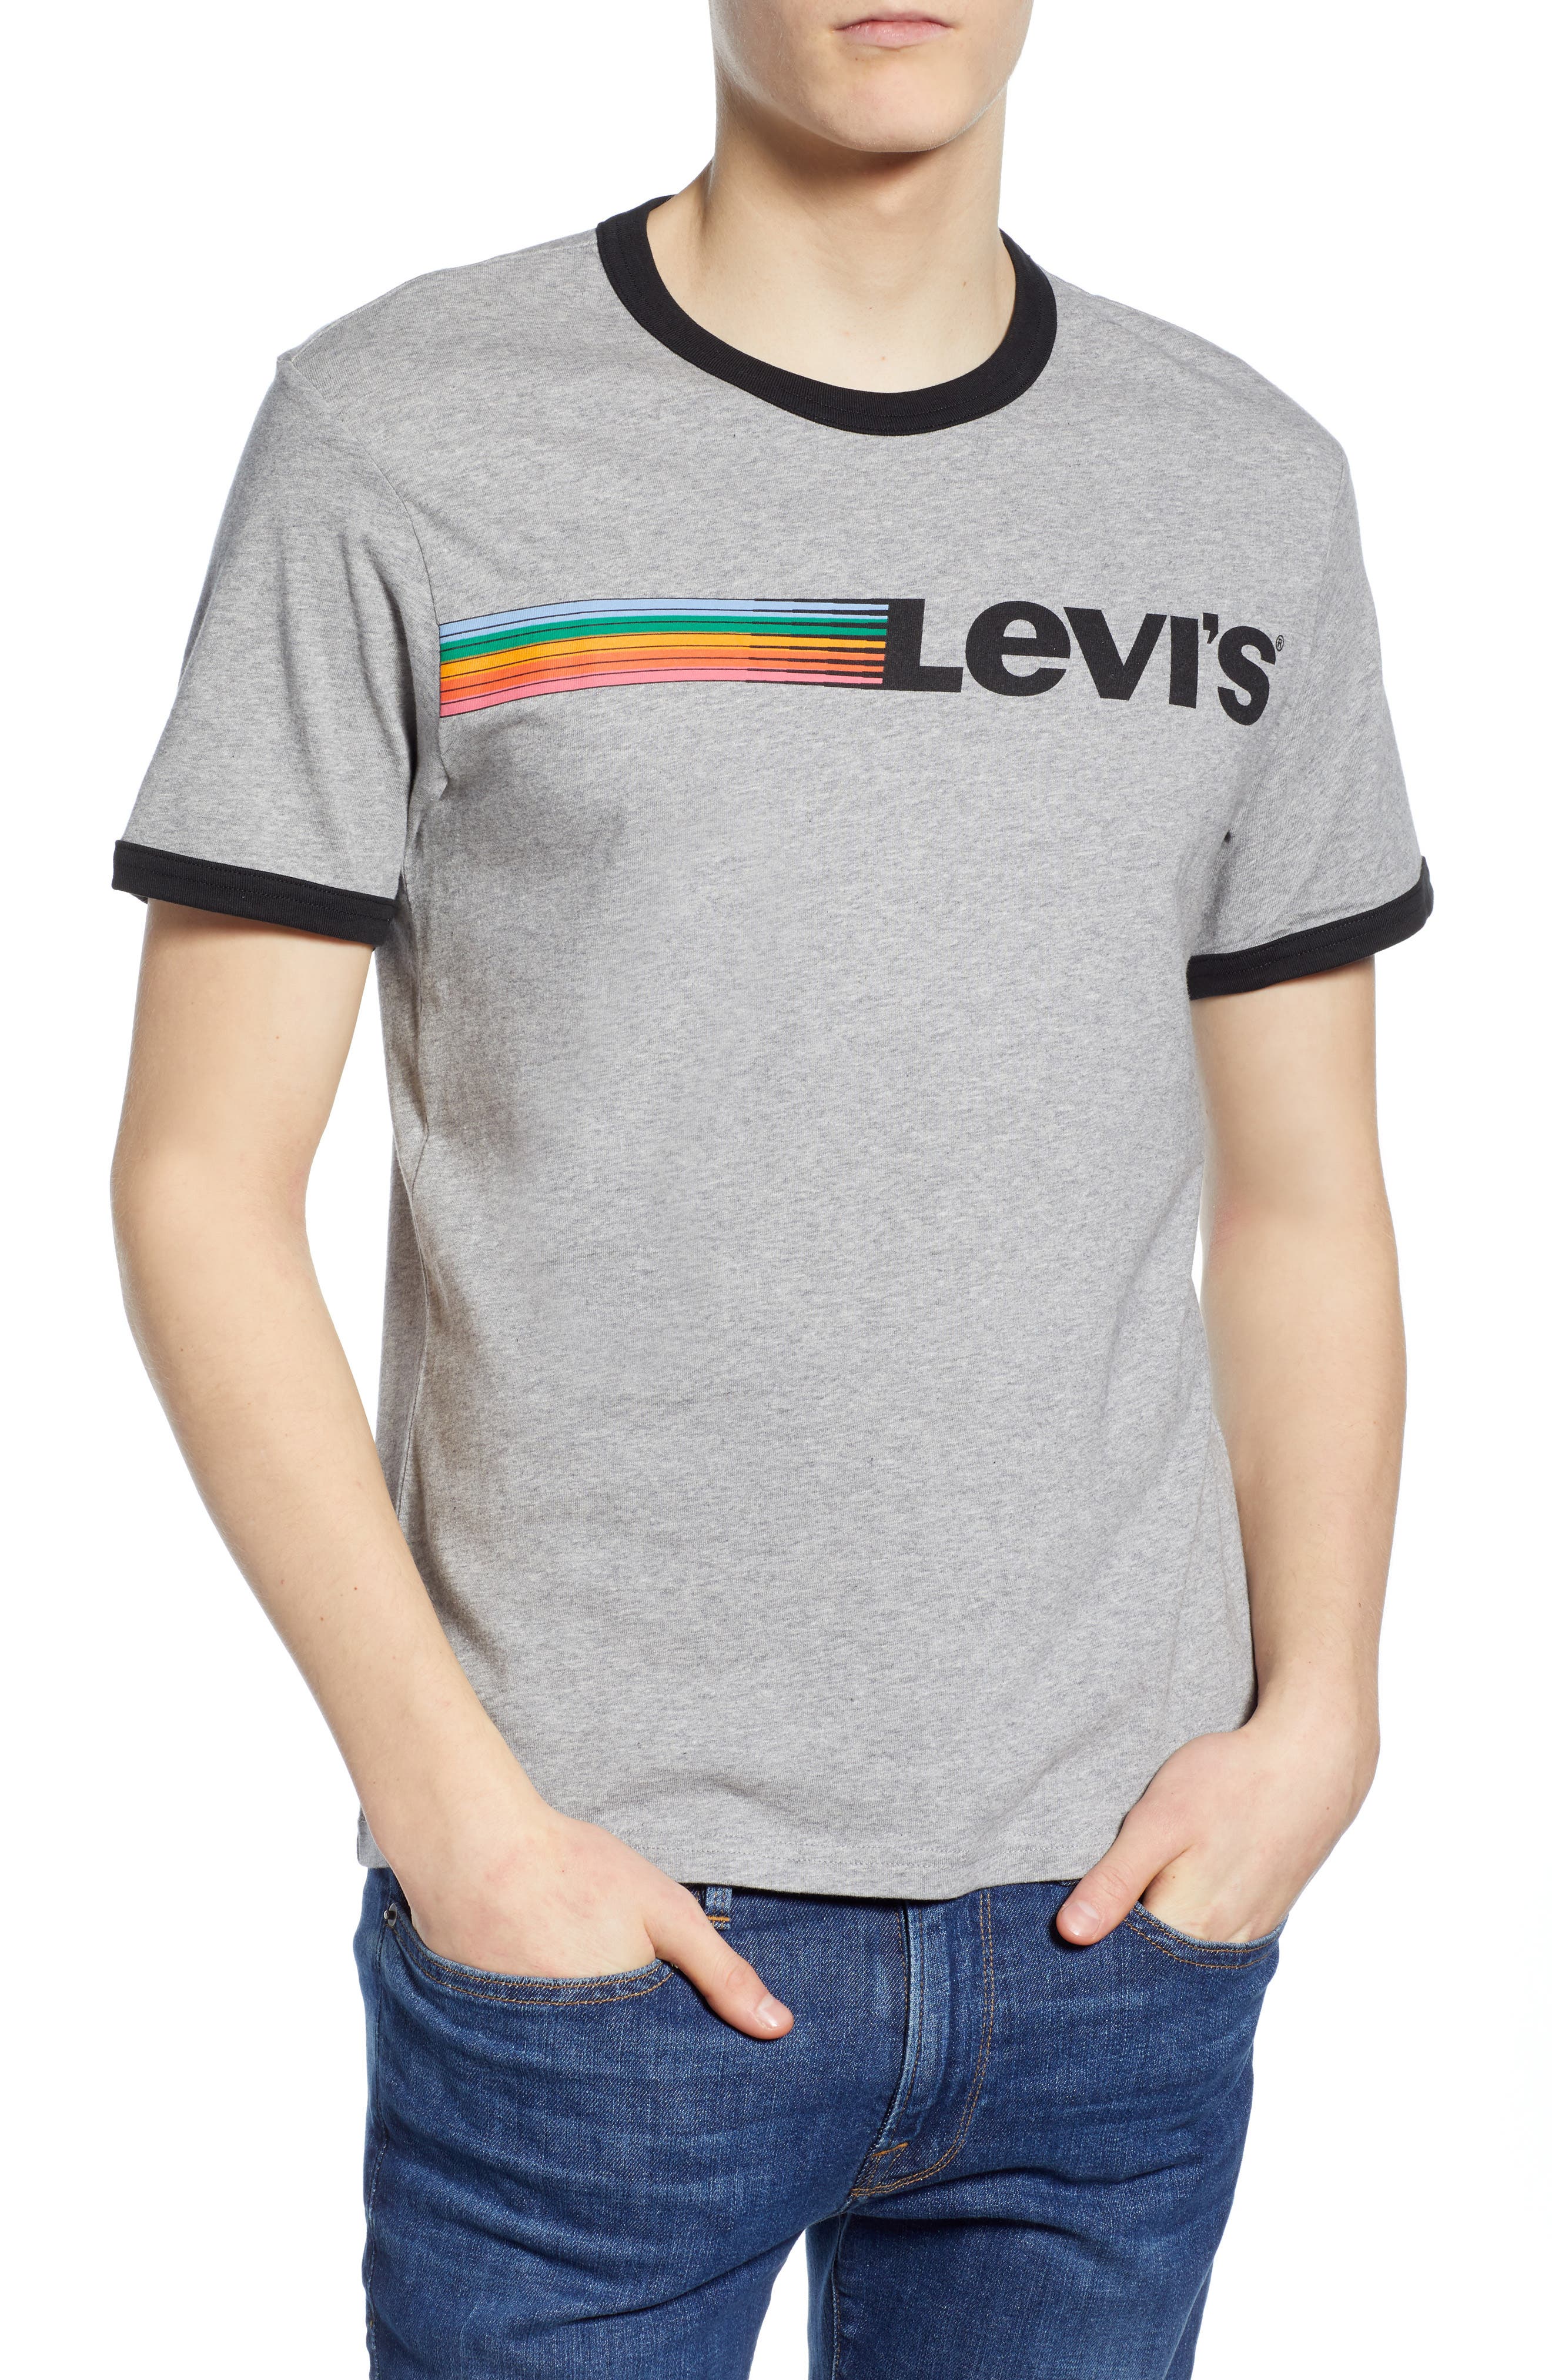 levis pride shirt